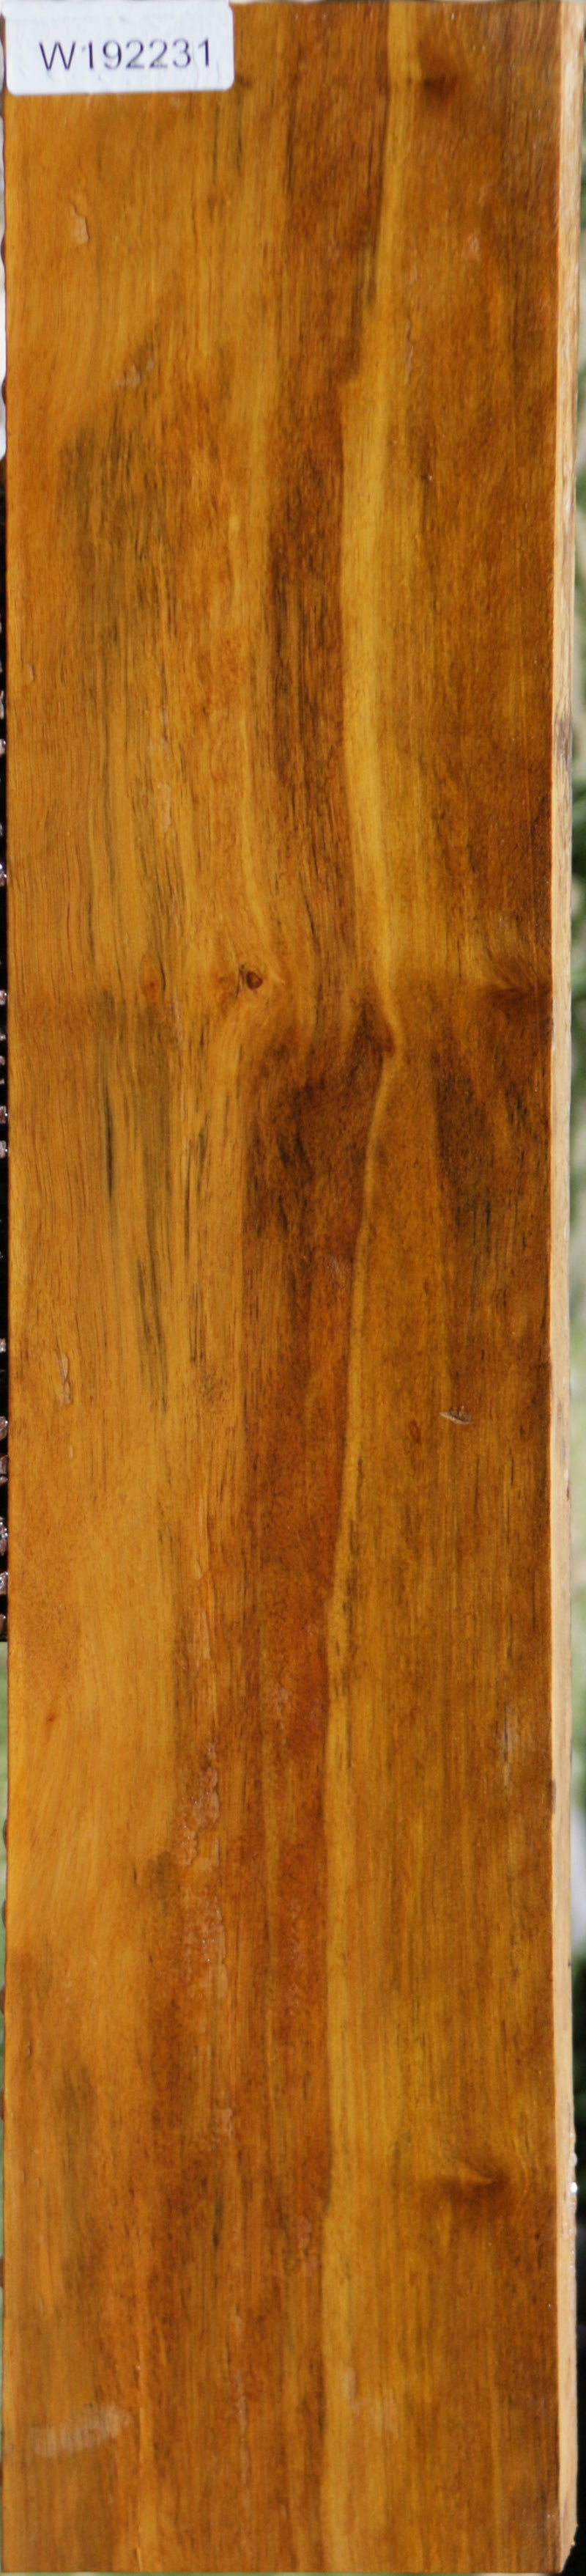 Cheesewood Lumber